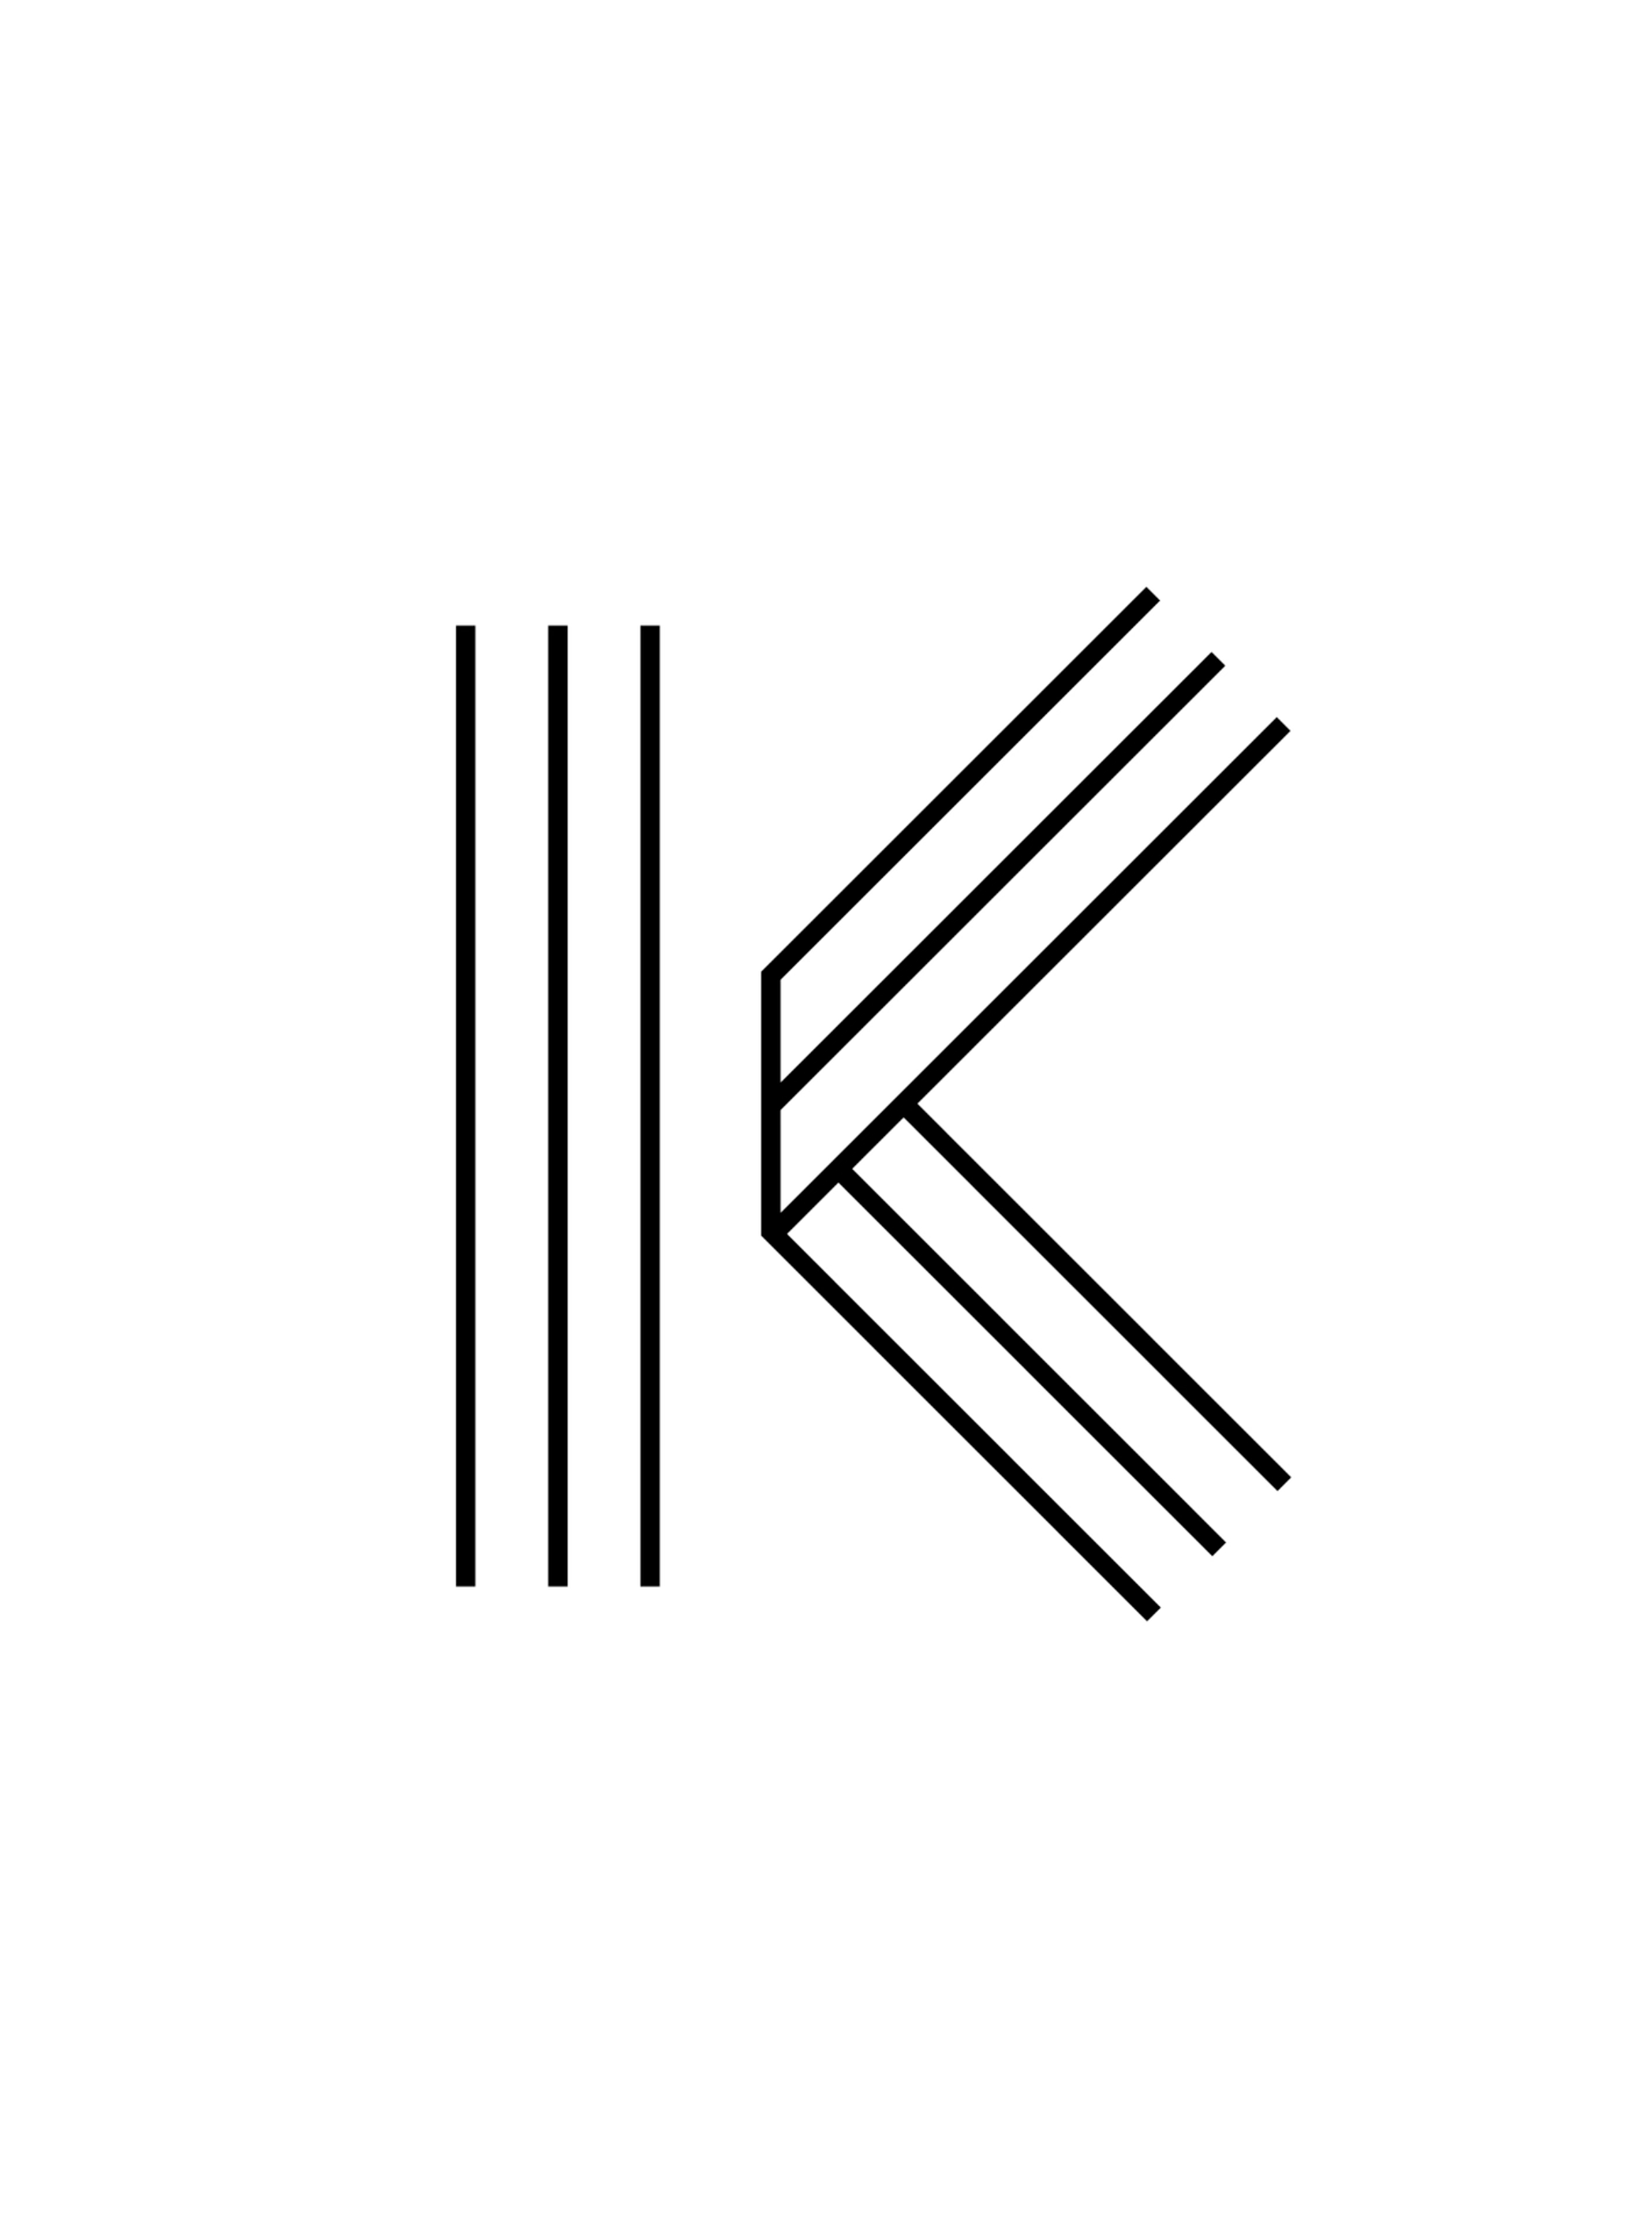 Letter K of the KOYORI logo type